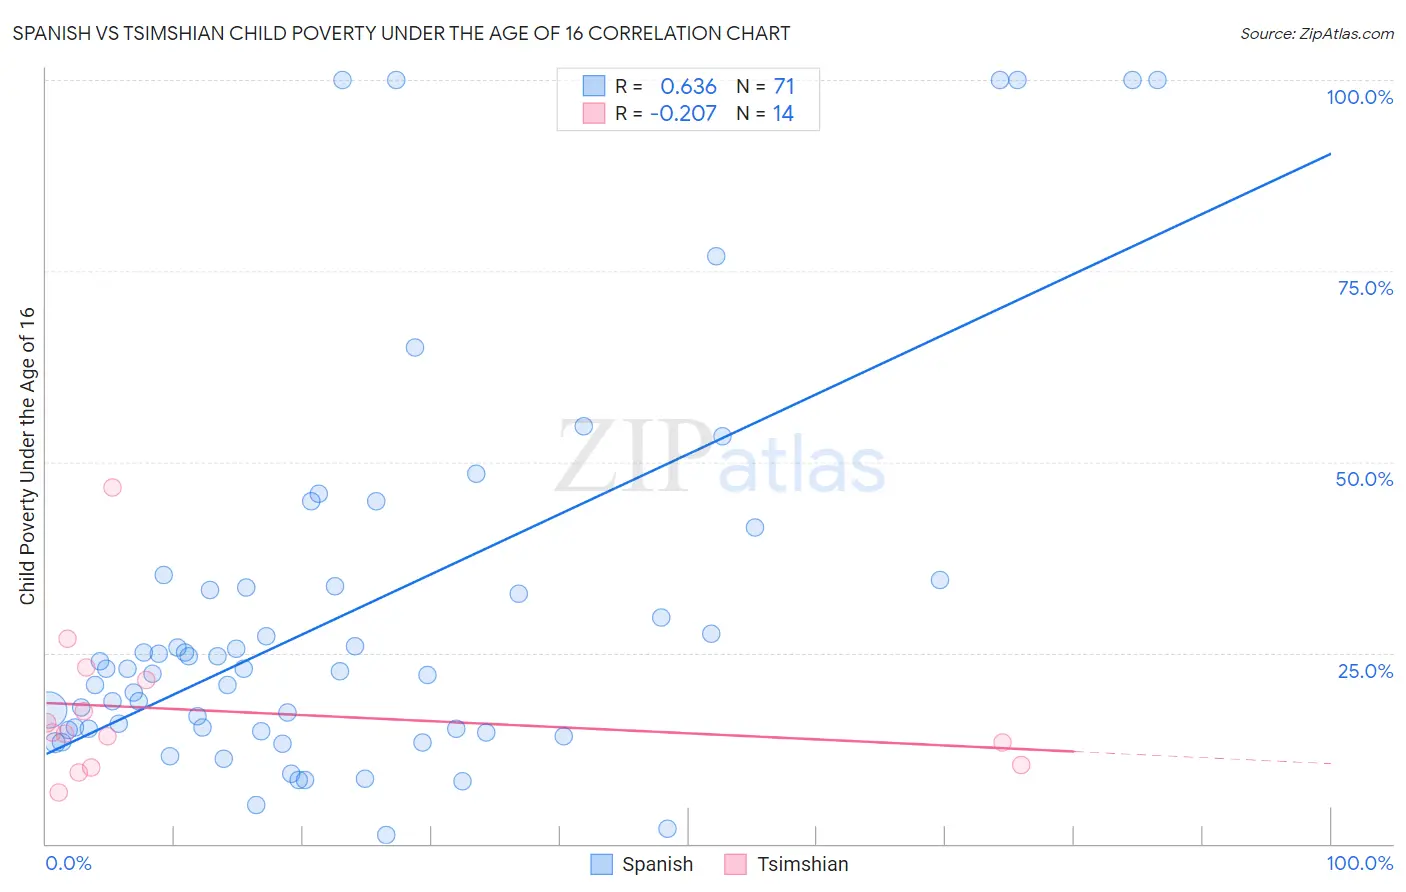 Spanish vs Tsimshian Child Poverty Under the Age of 16